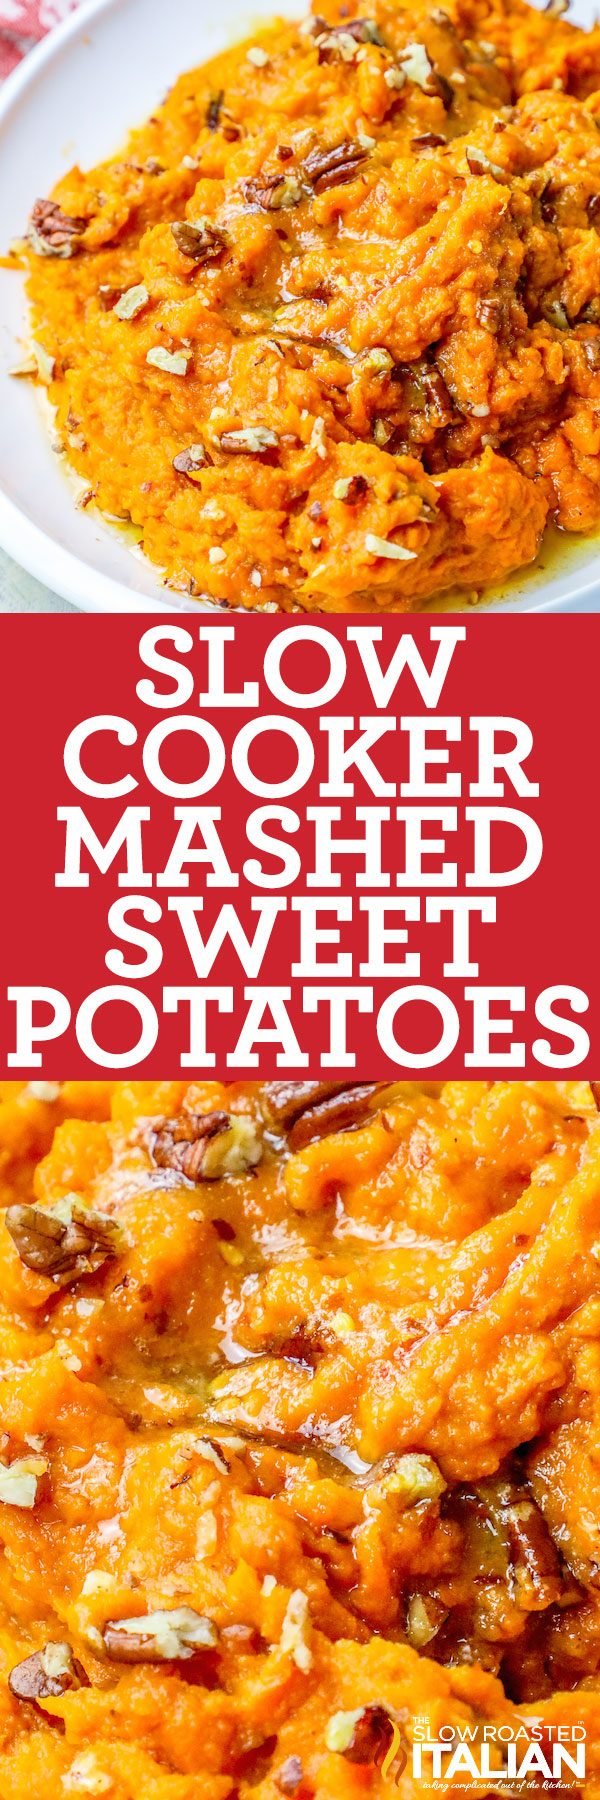 slow-cooker-mashed-sweet-potatoes-pin-4443756